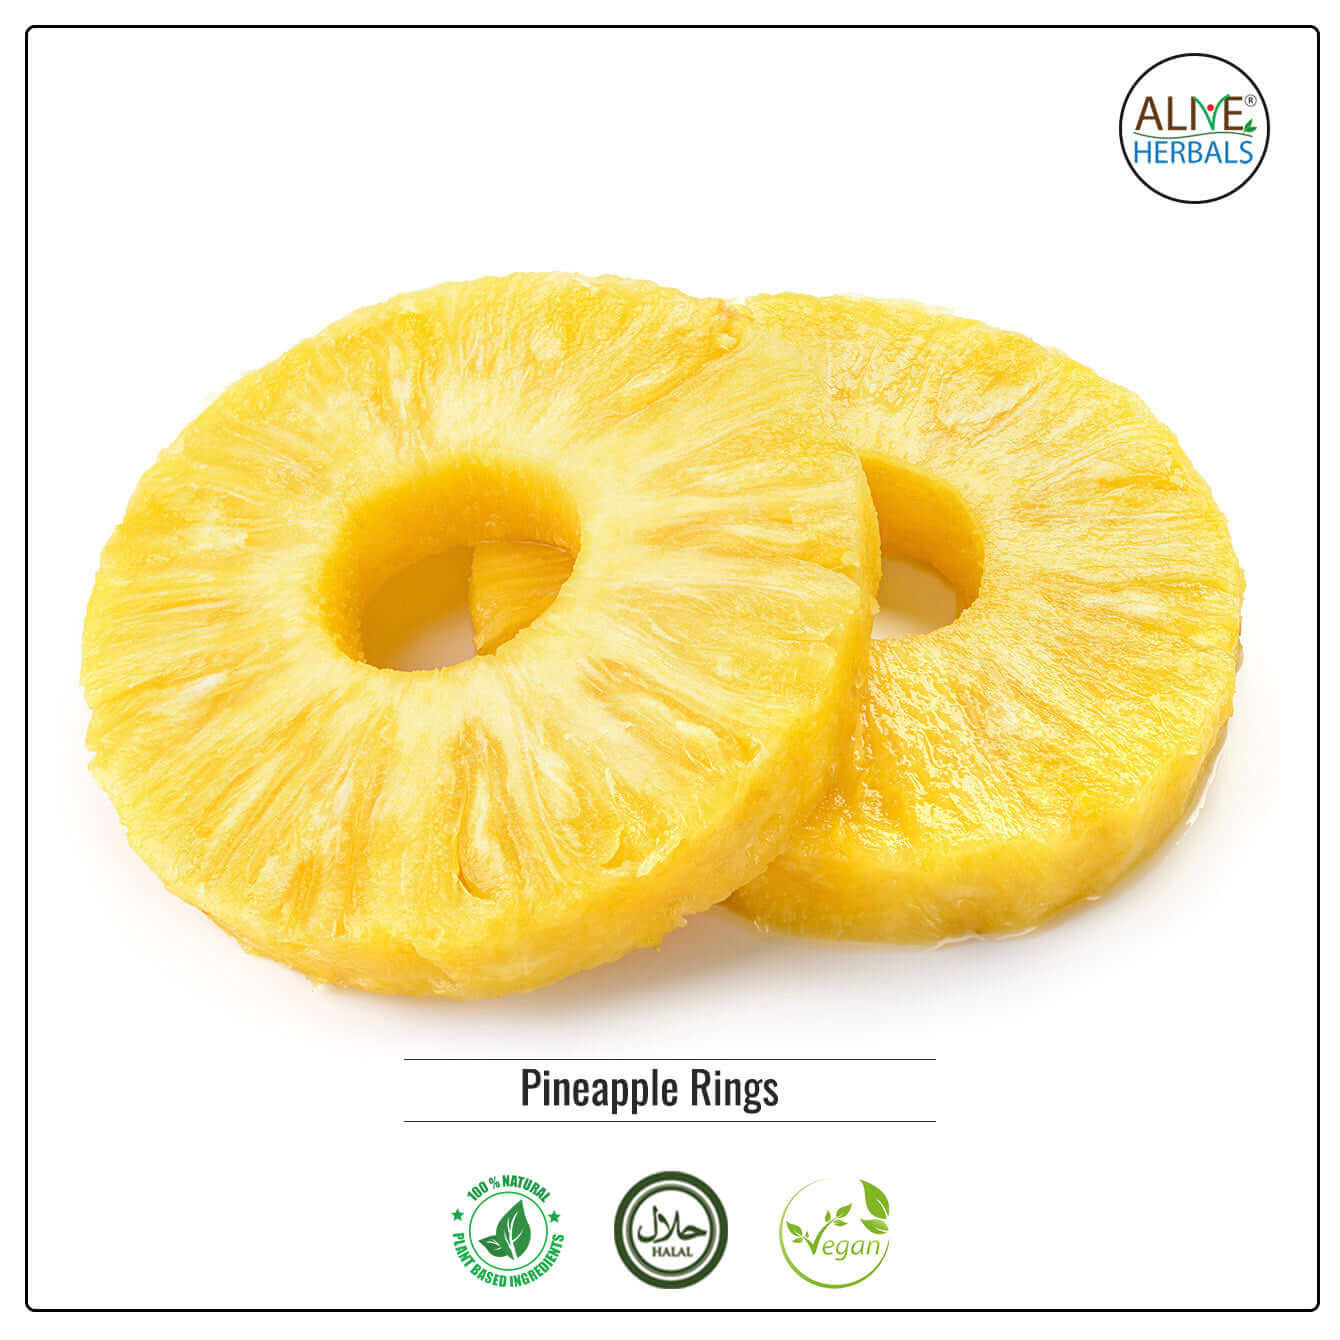 Dried Pineapple rings - Buy at Natural Food Store | Alive Herbals.